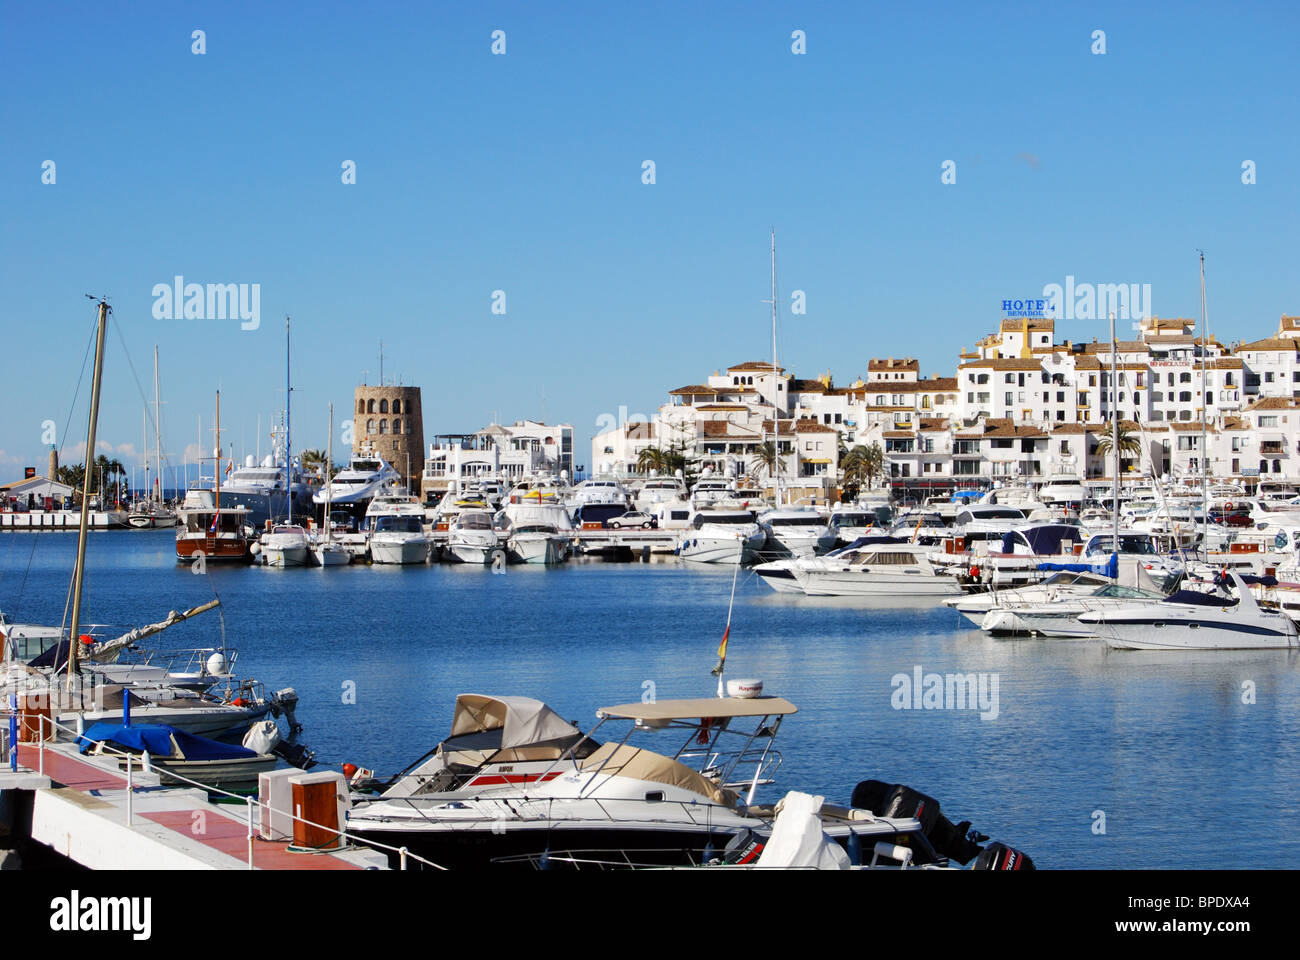 Puerto Banus Marina, Marbella, Malaga Province, Andalucia